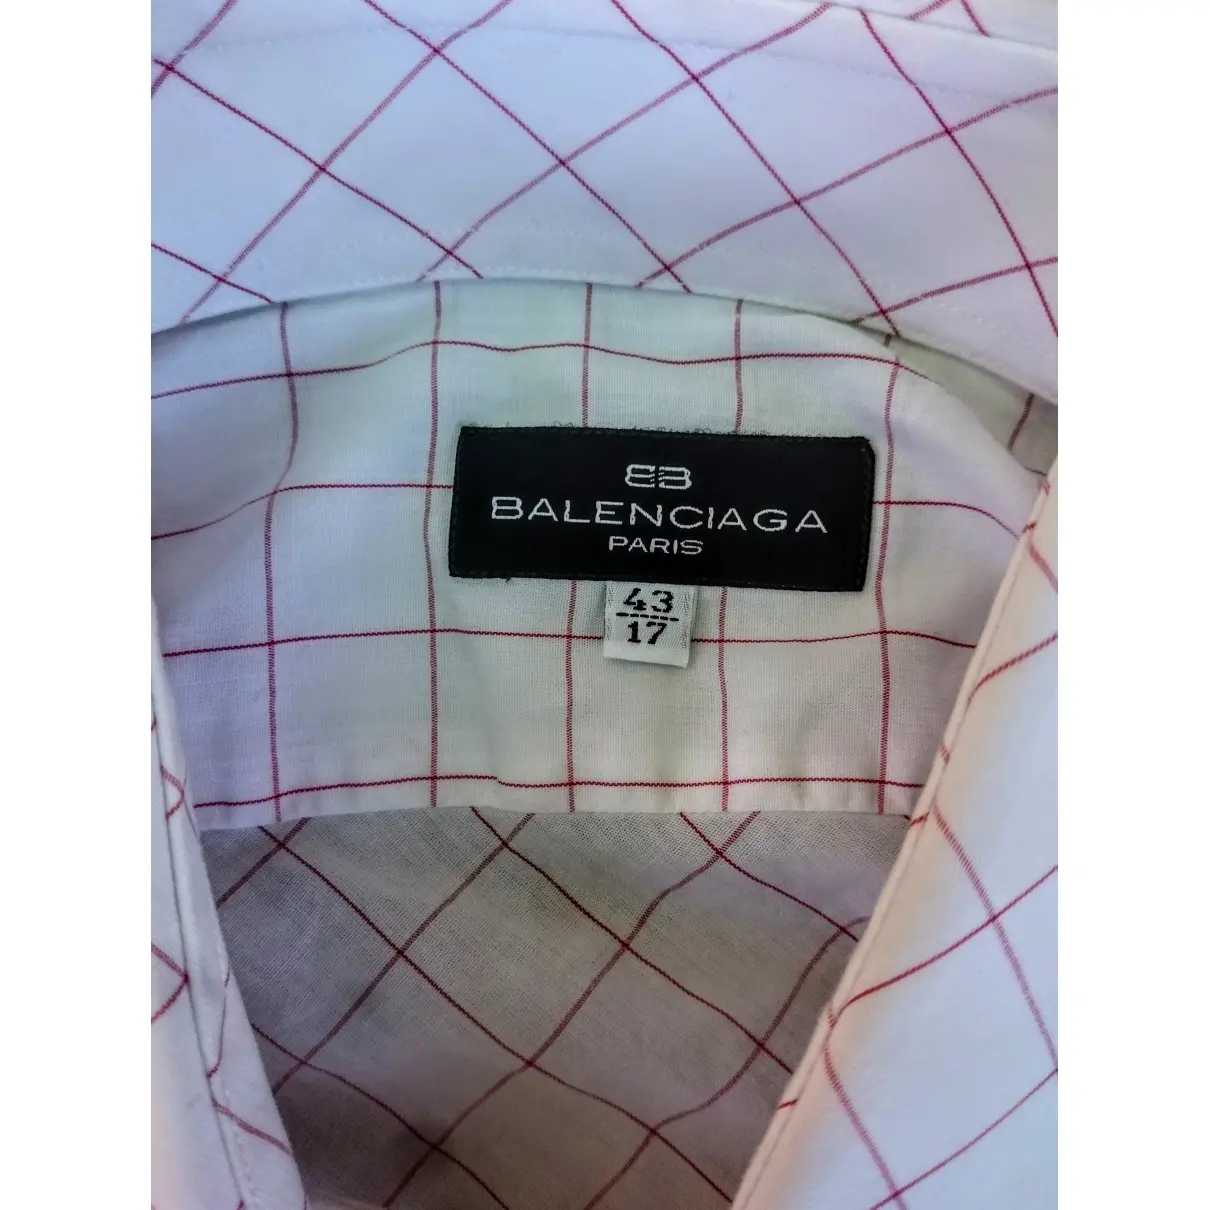 Buy Balenciaga Shirt online - Vintage